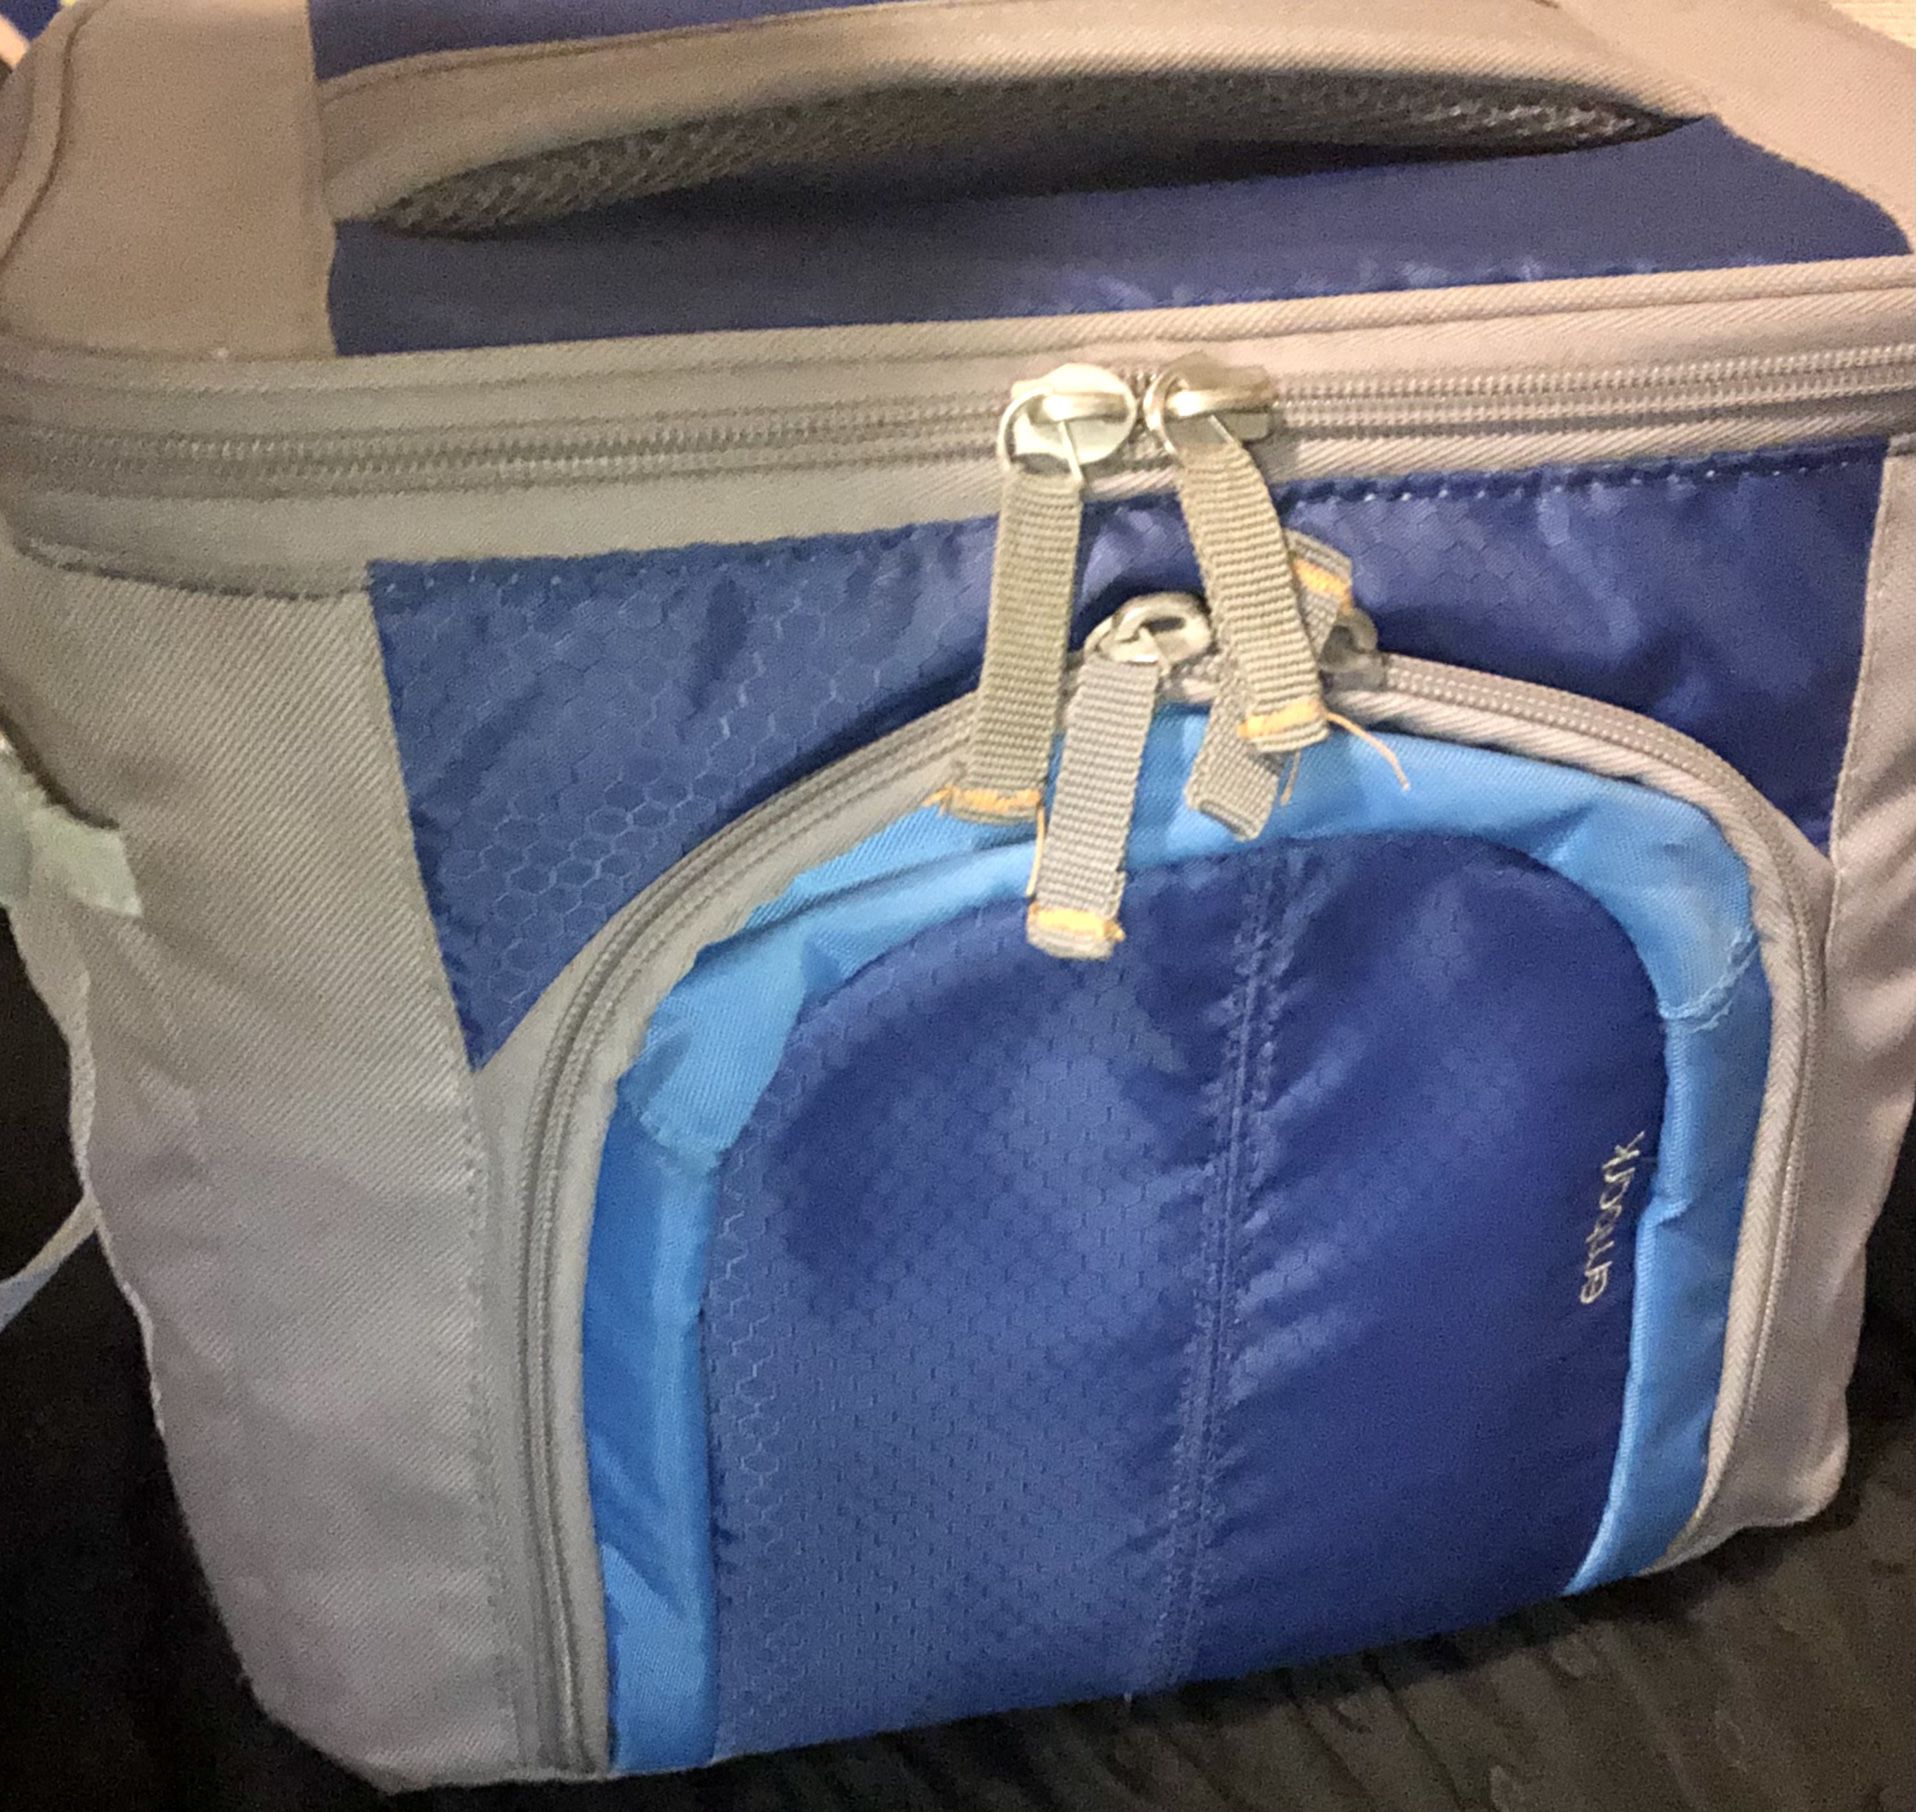 Embark Gray & Blue Cooler 9” H x 11”L x 8”W Shoulder Bag & Handle w/2 Side Mesh Pockets.  $10 pickup/$14 Shipping